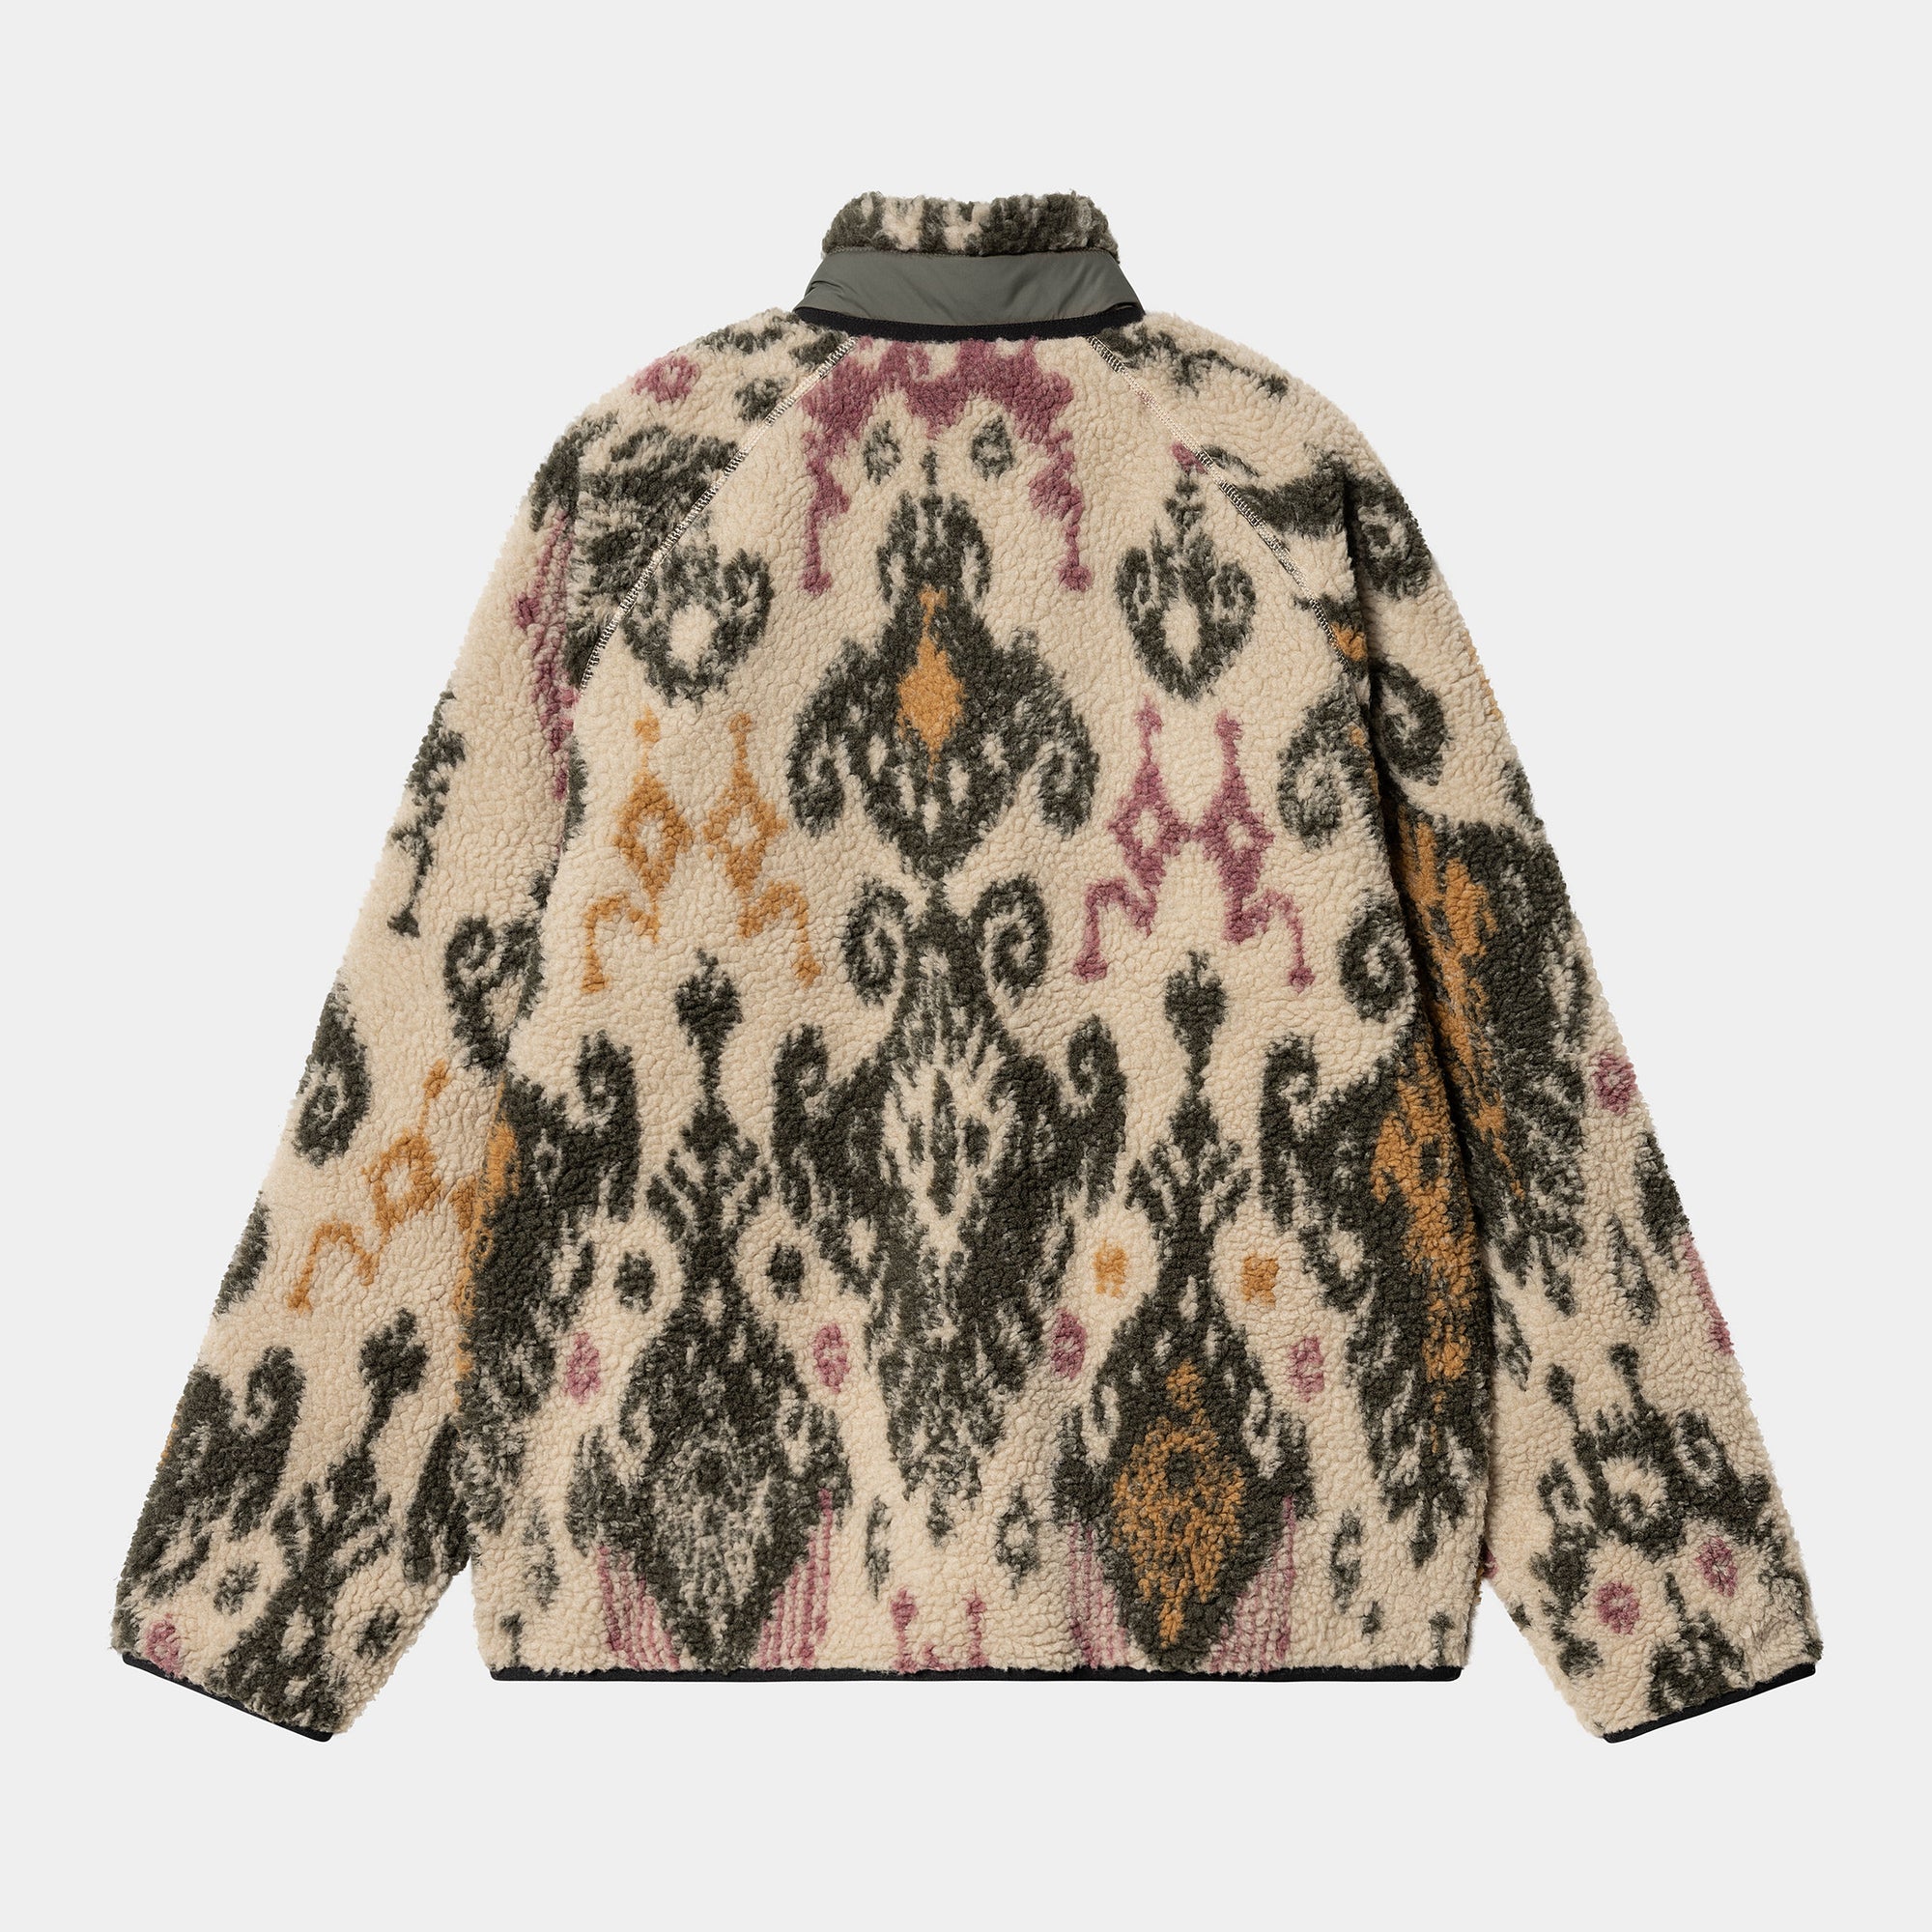 Carhartt WIP - Prentis Liner Fleece Jacket - Baru Jacquard / Wall / Cypress